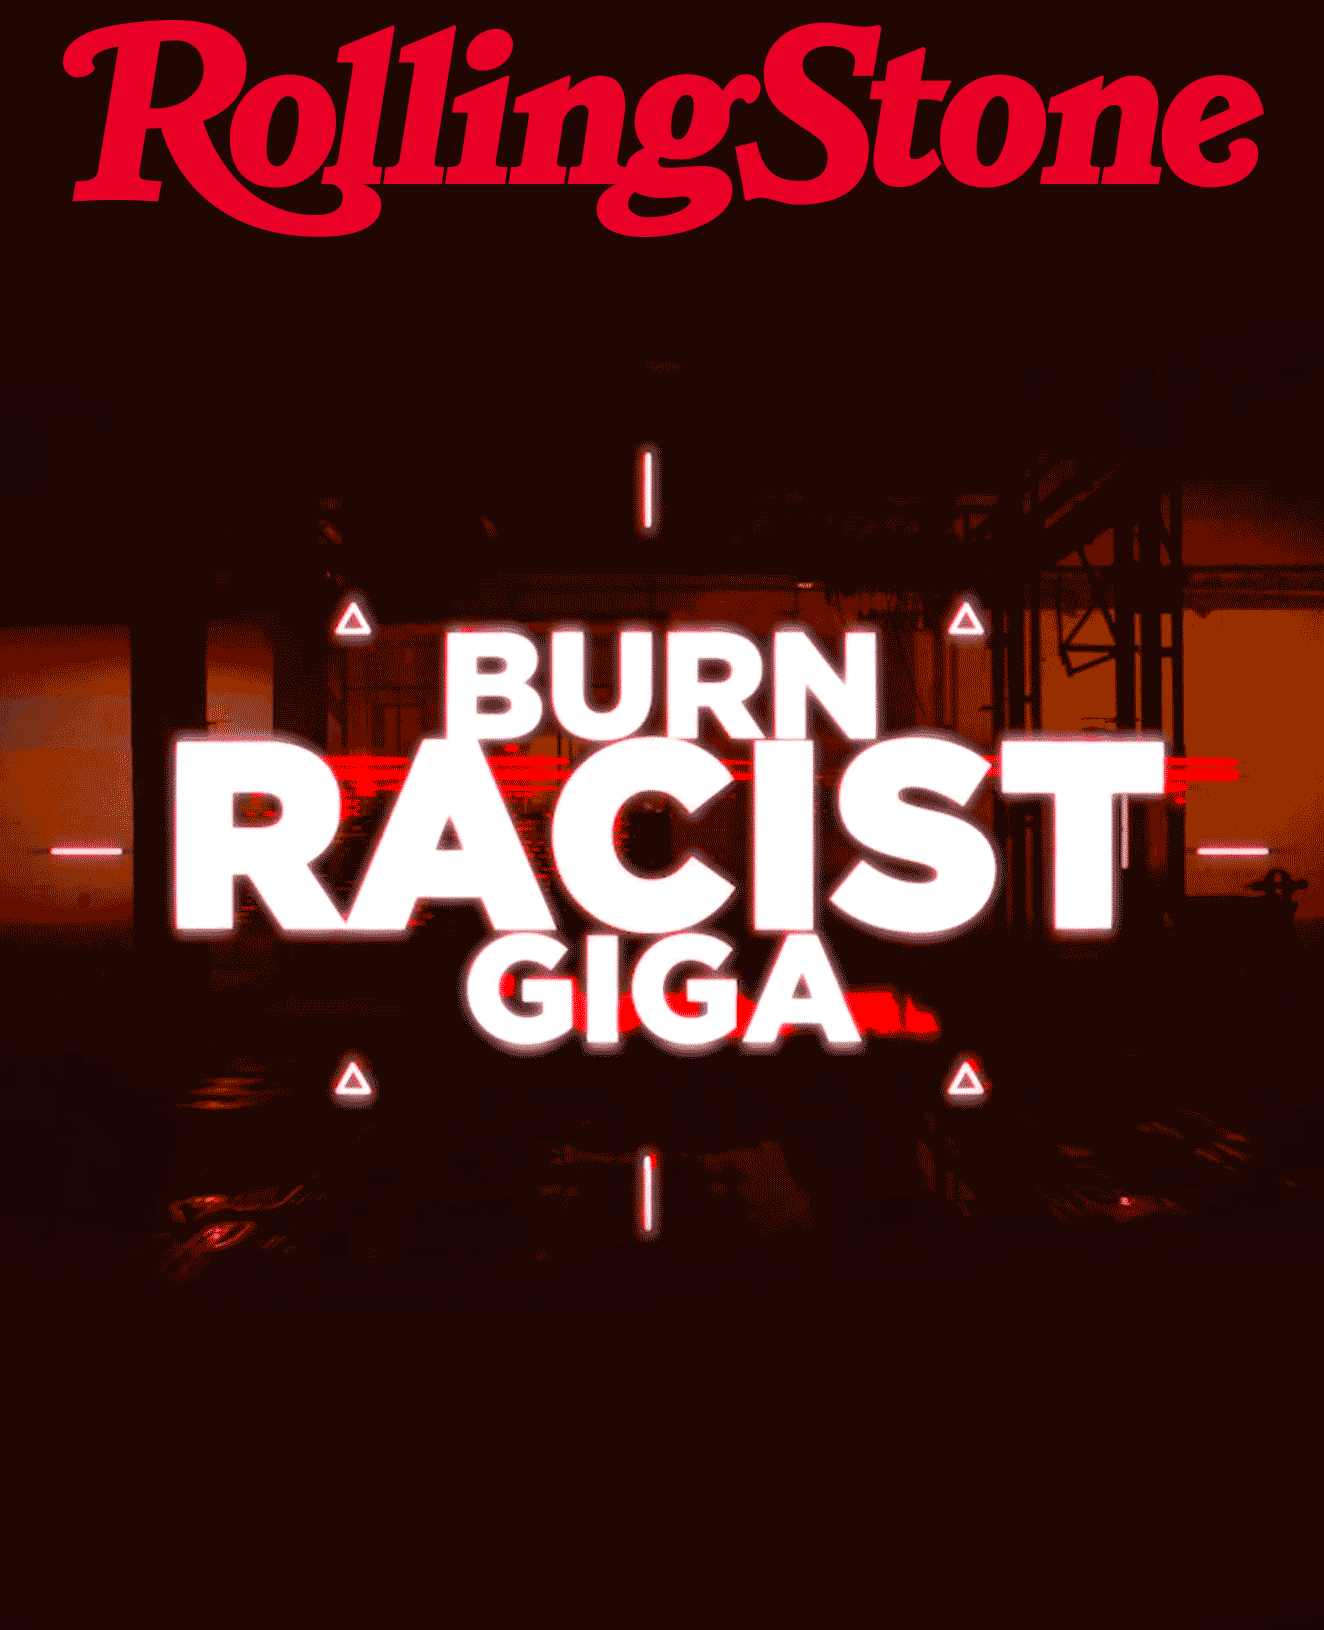 Burn racist Giga Rolling Stone